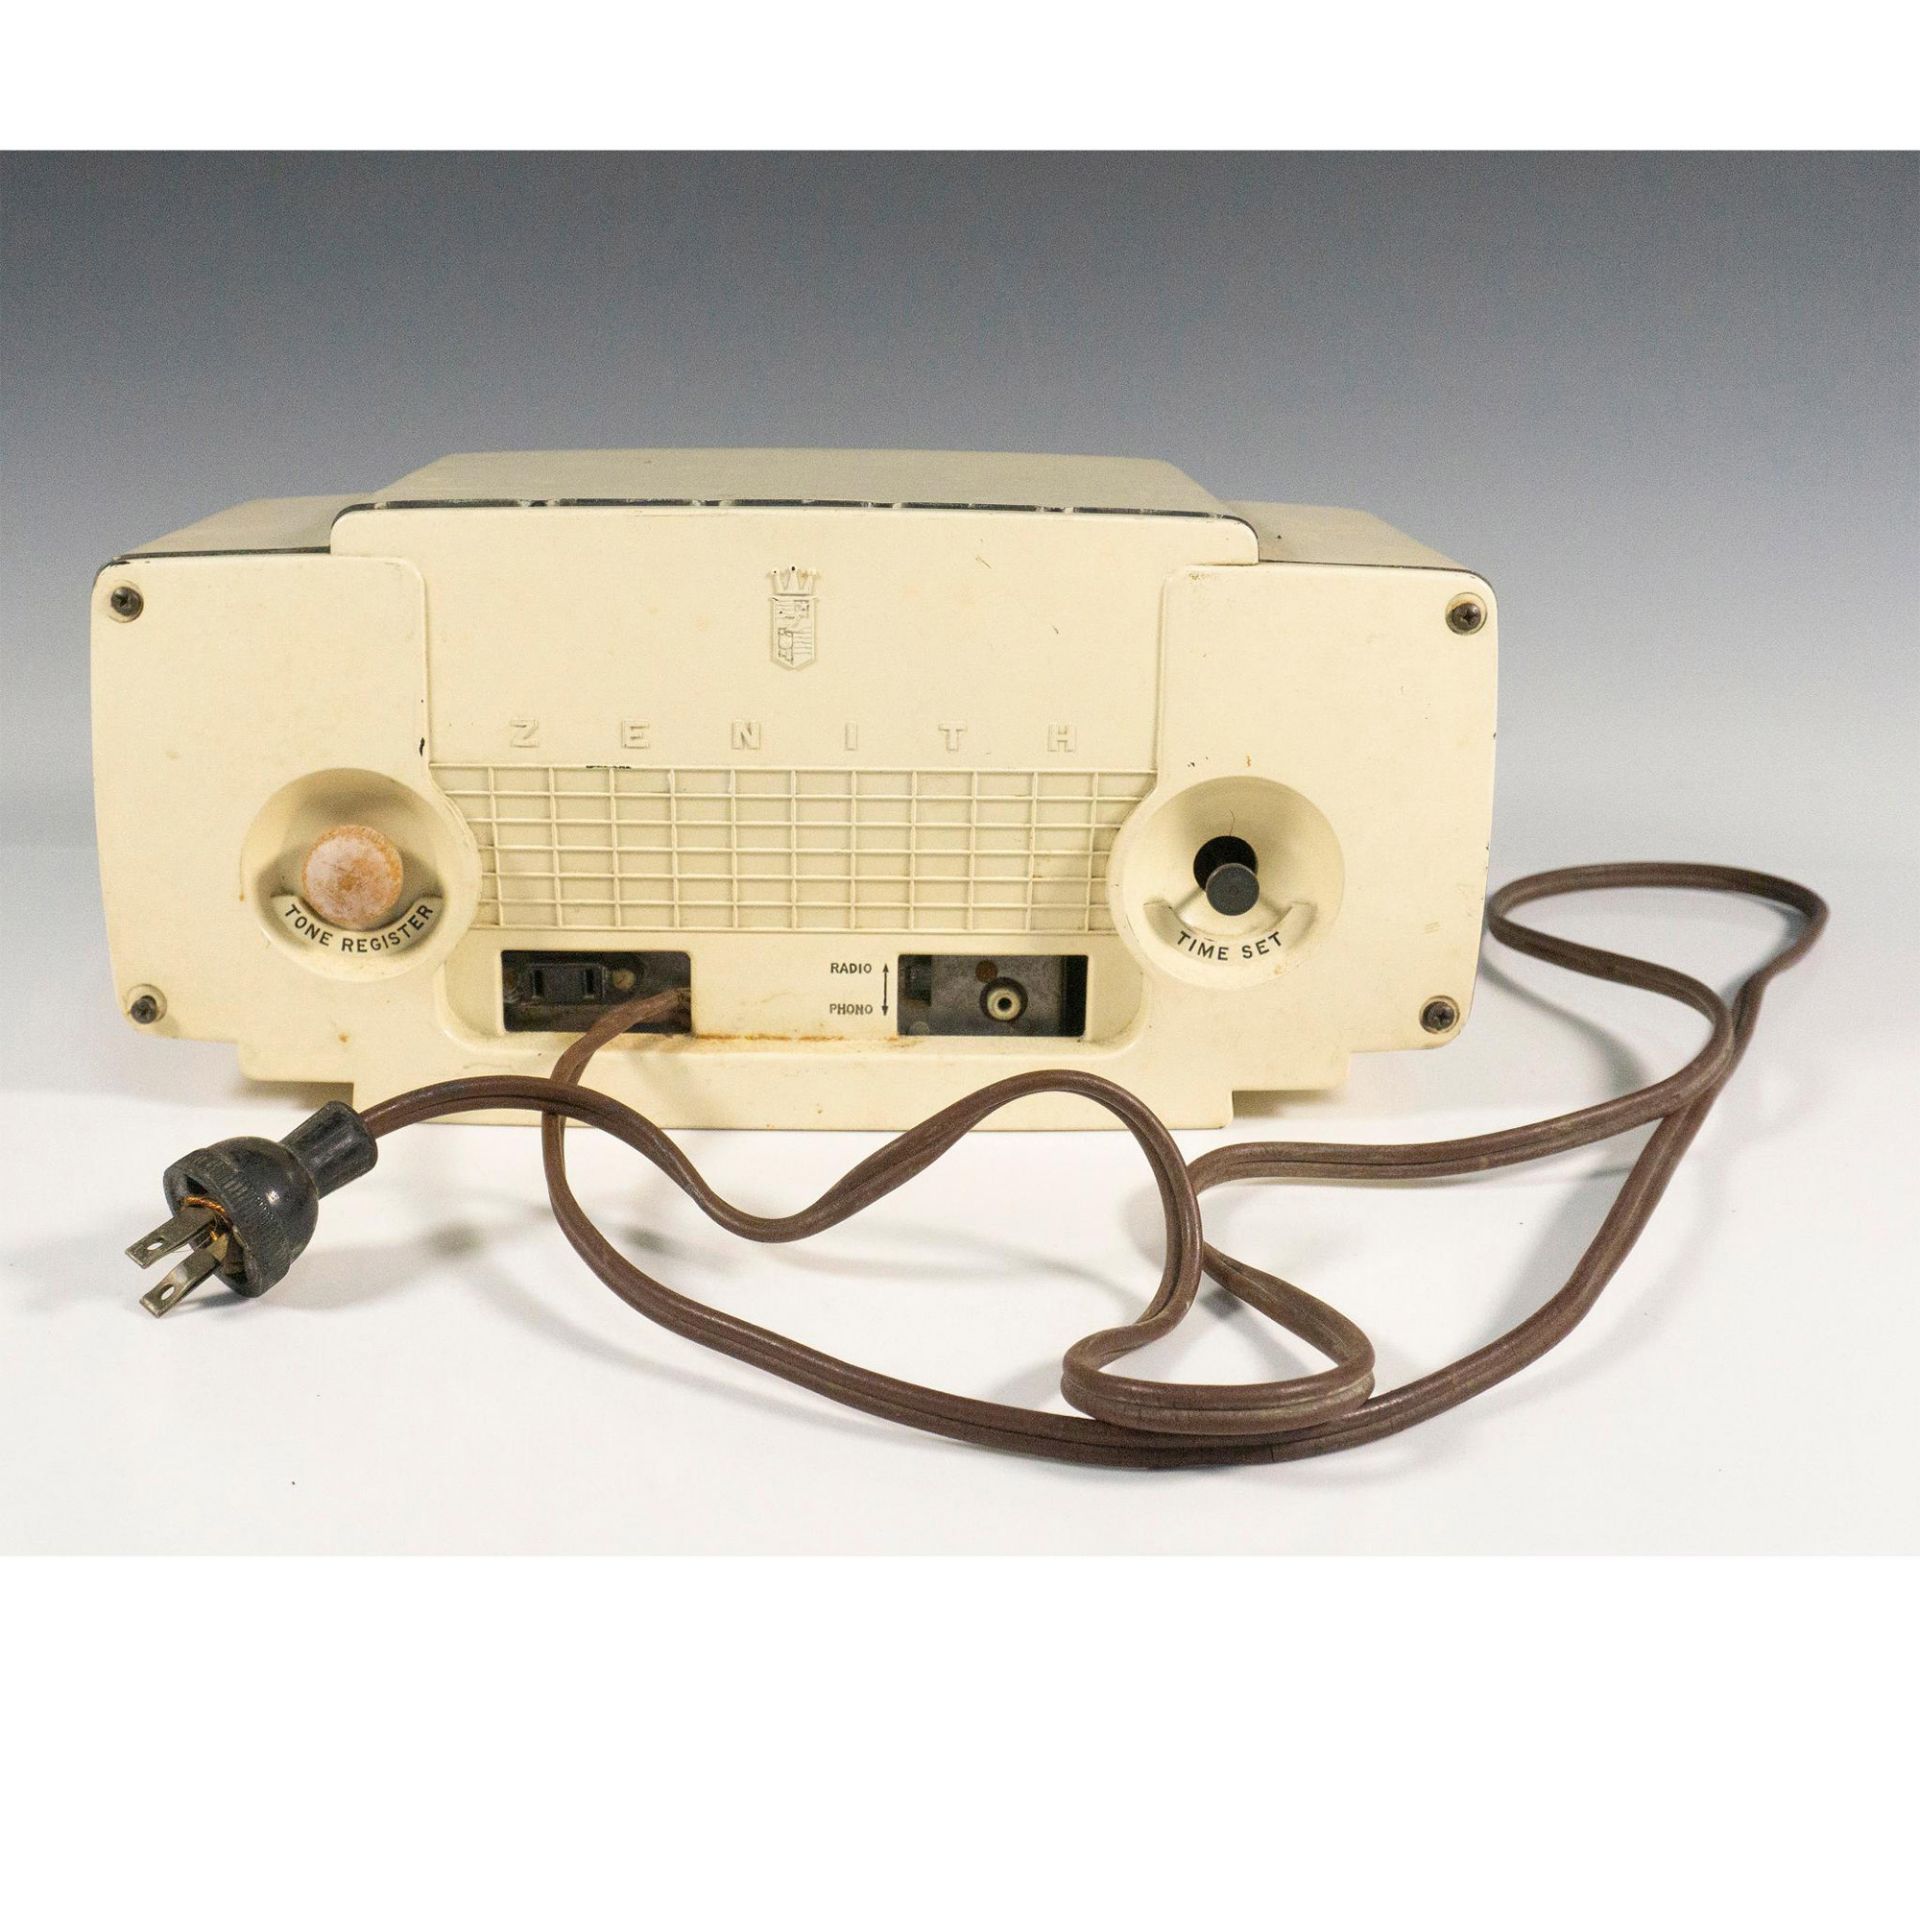 Vintage Zenith Model K622 Vacuum Tube Radio Alarm Clock - Image 2 of 4